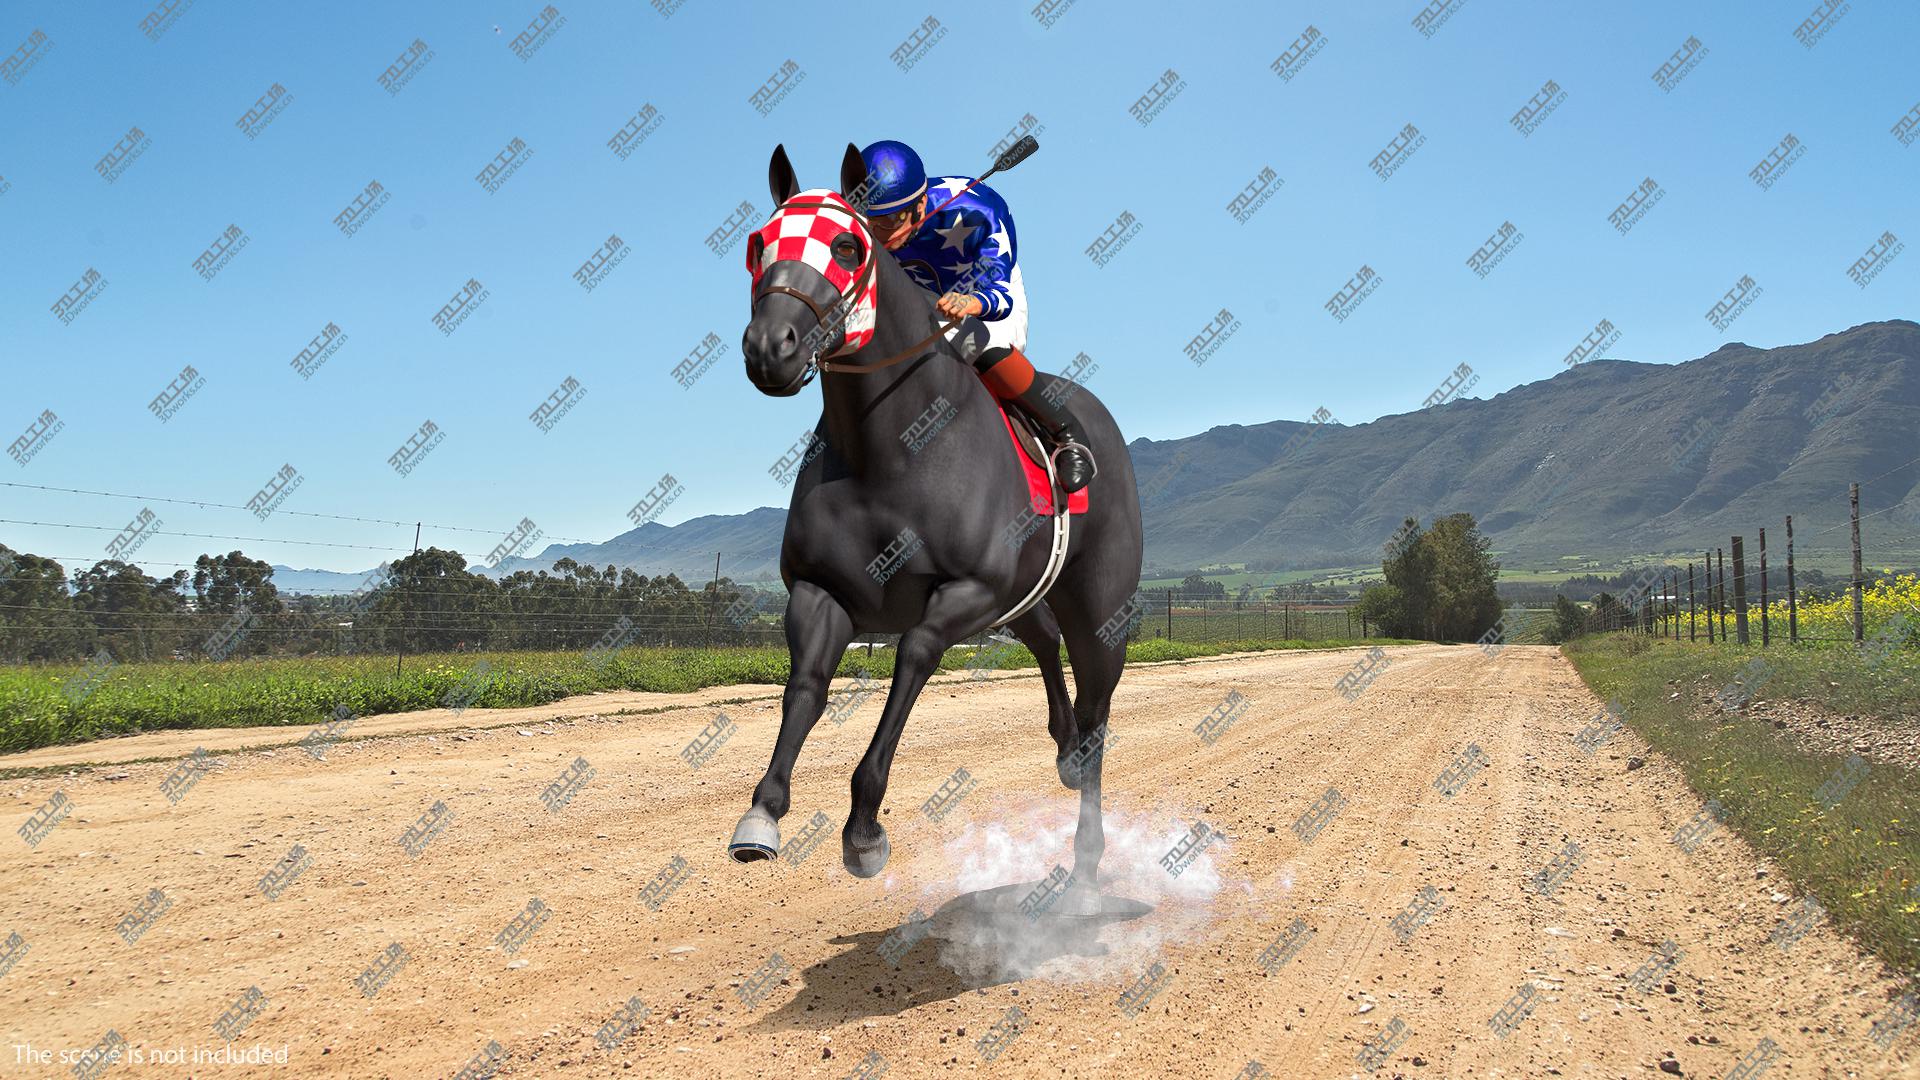 images/goods_img/202105071/3D model Running Black Racing Horse with Jokey/5.jpg